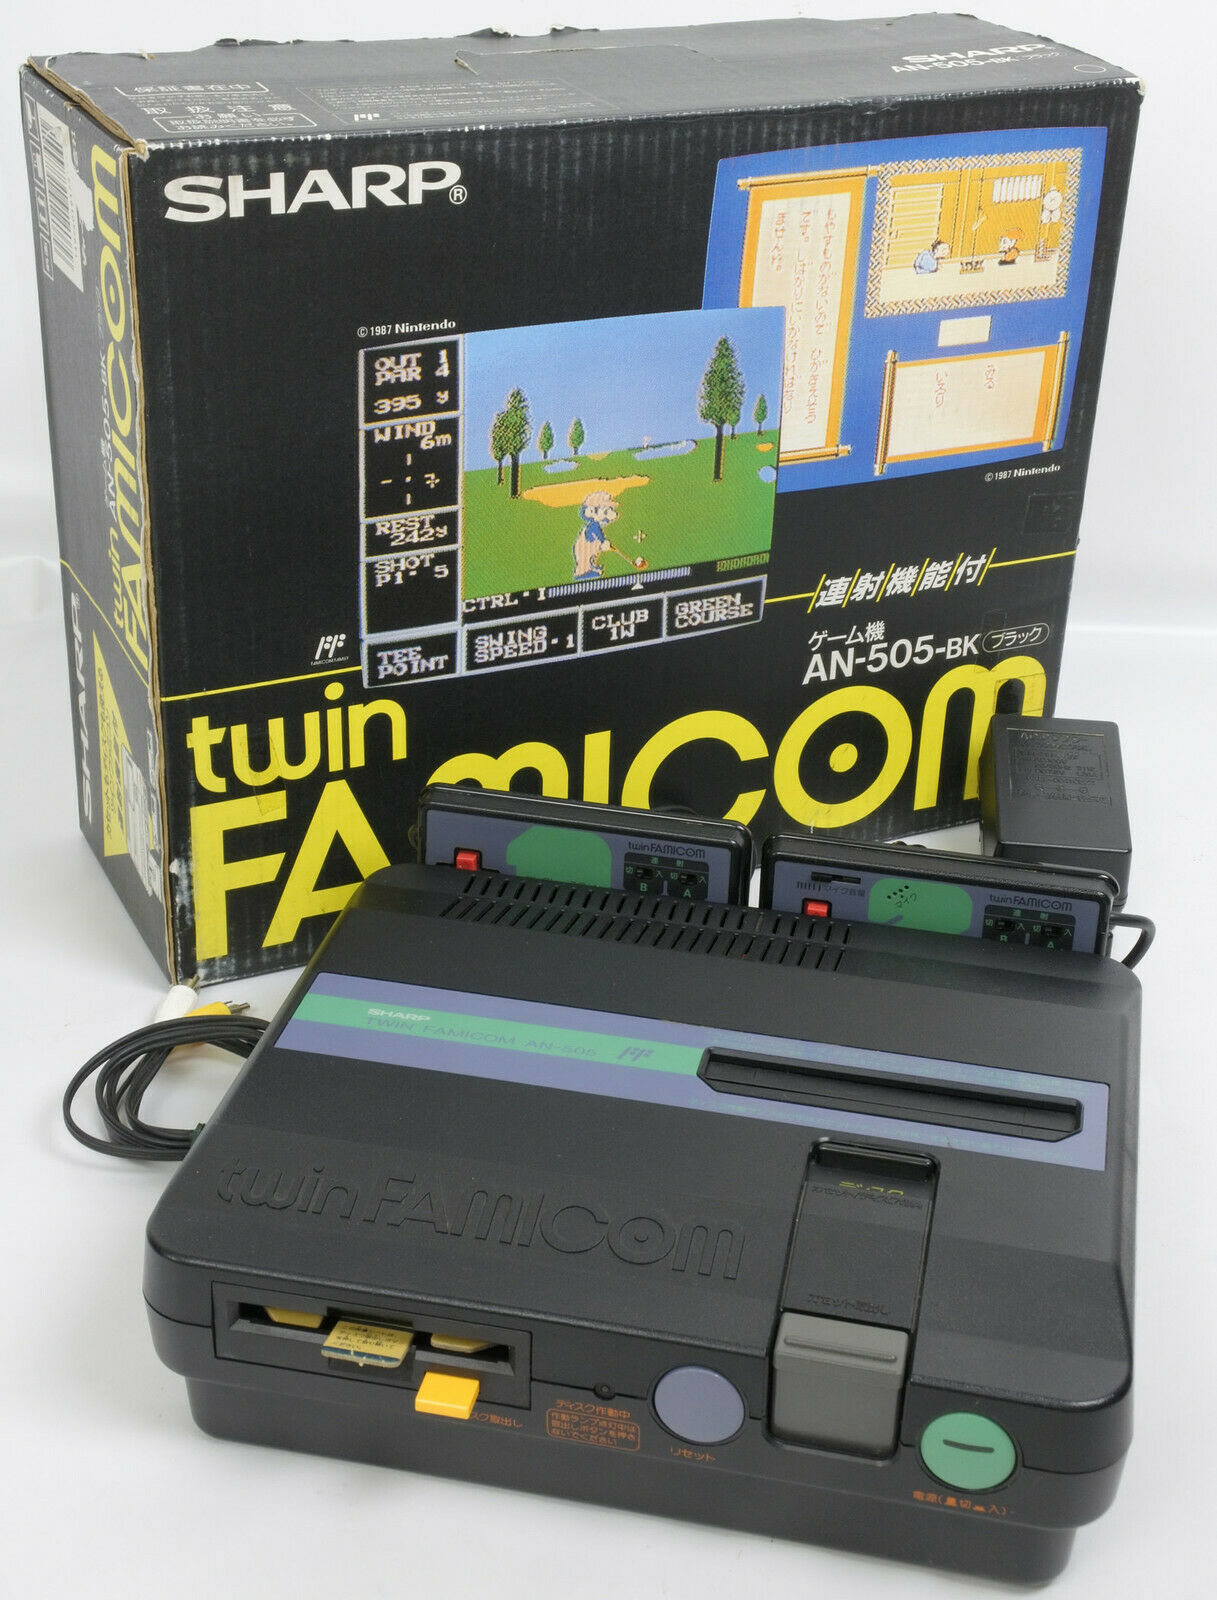 SHARP/ツインファミコン☆AN-505-BK 中古品B-7809 - ゲーム